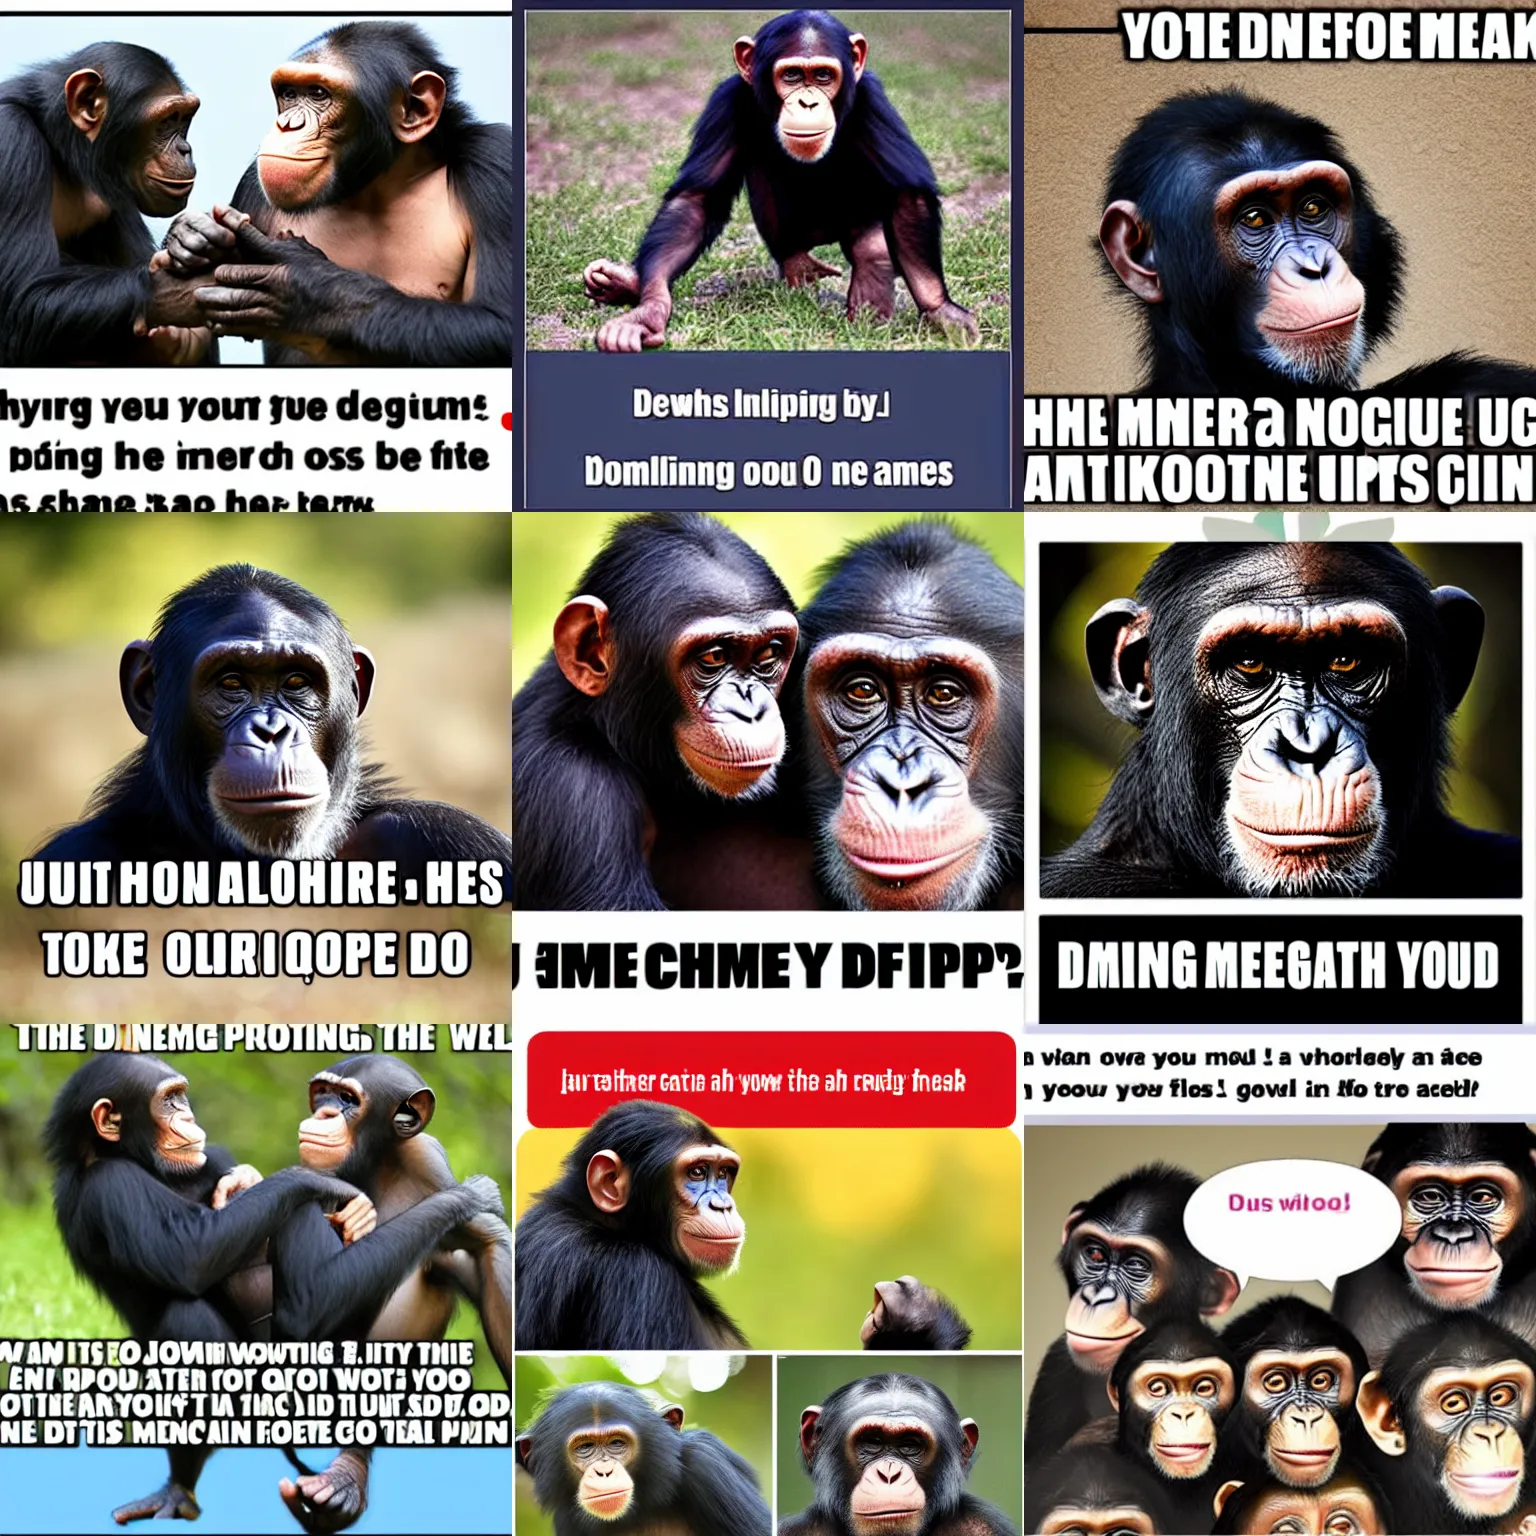 Prompt: chimp dating website meme